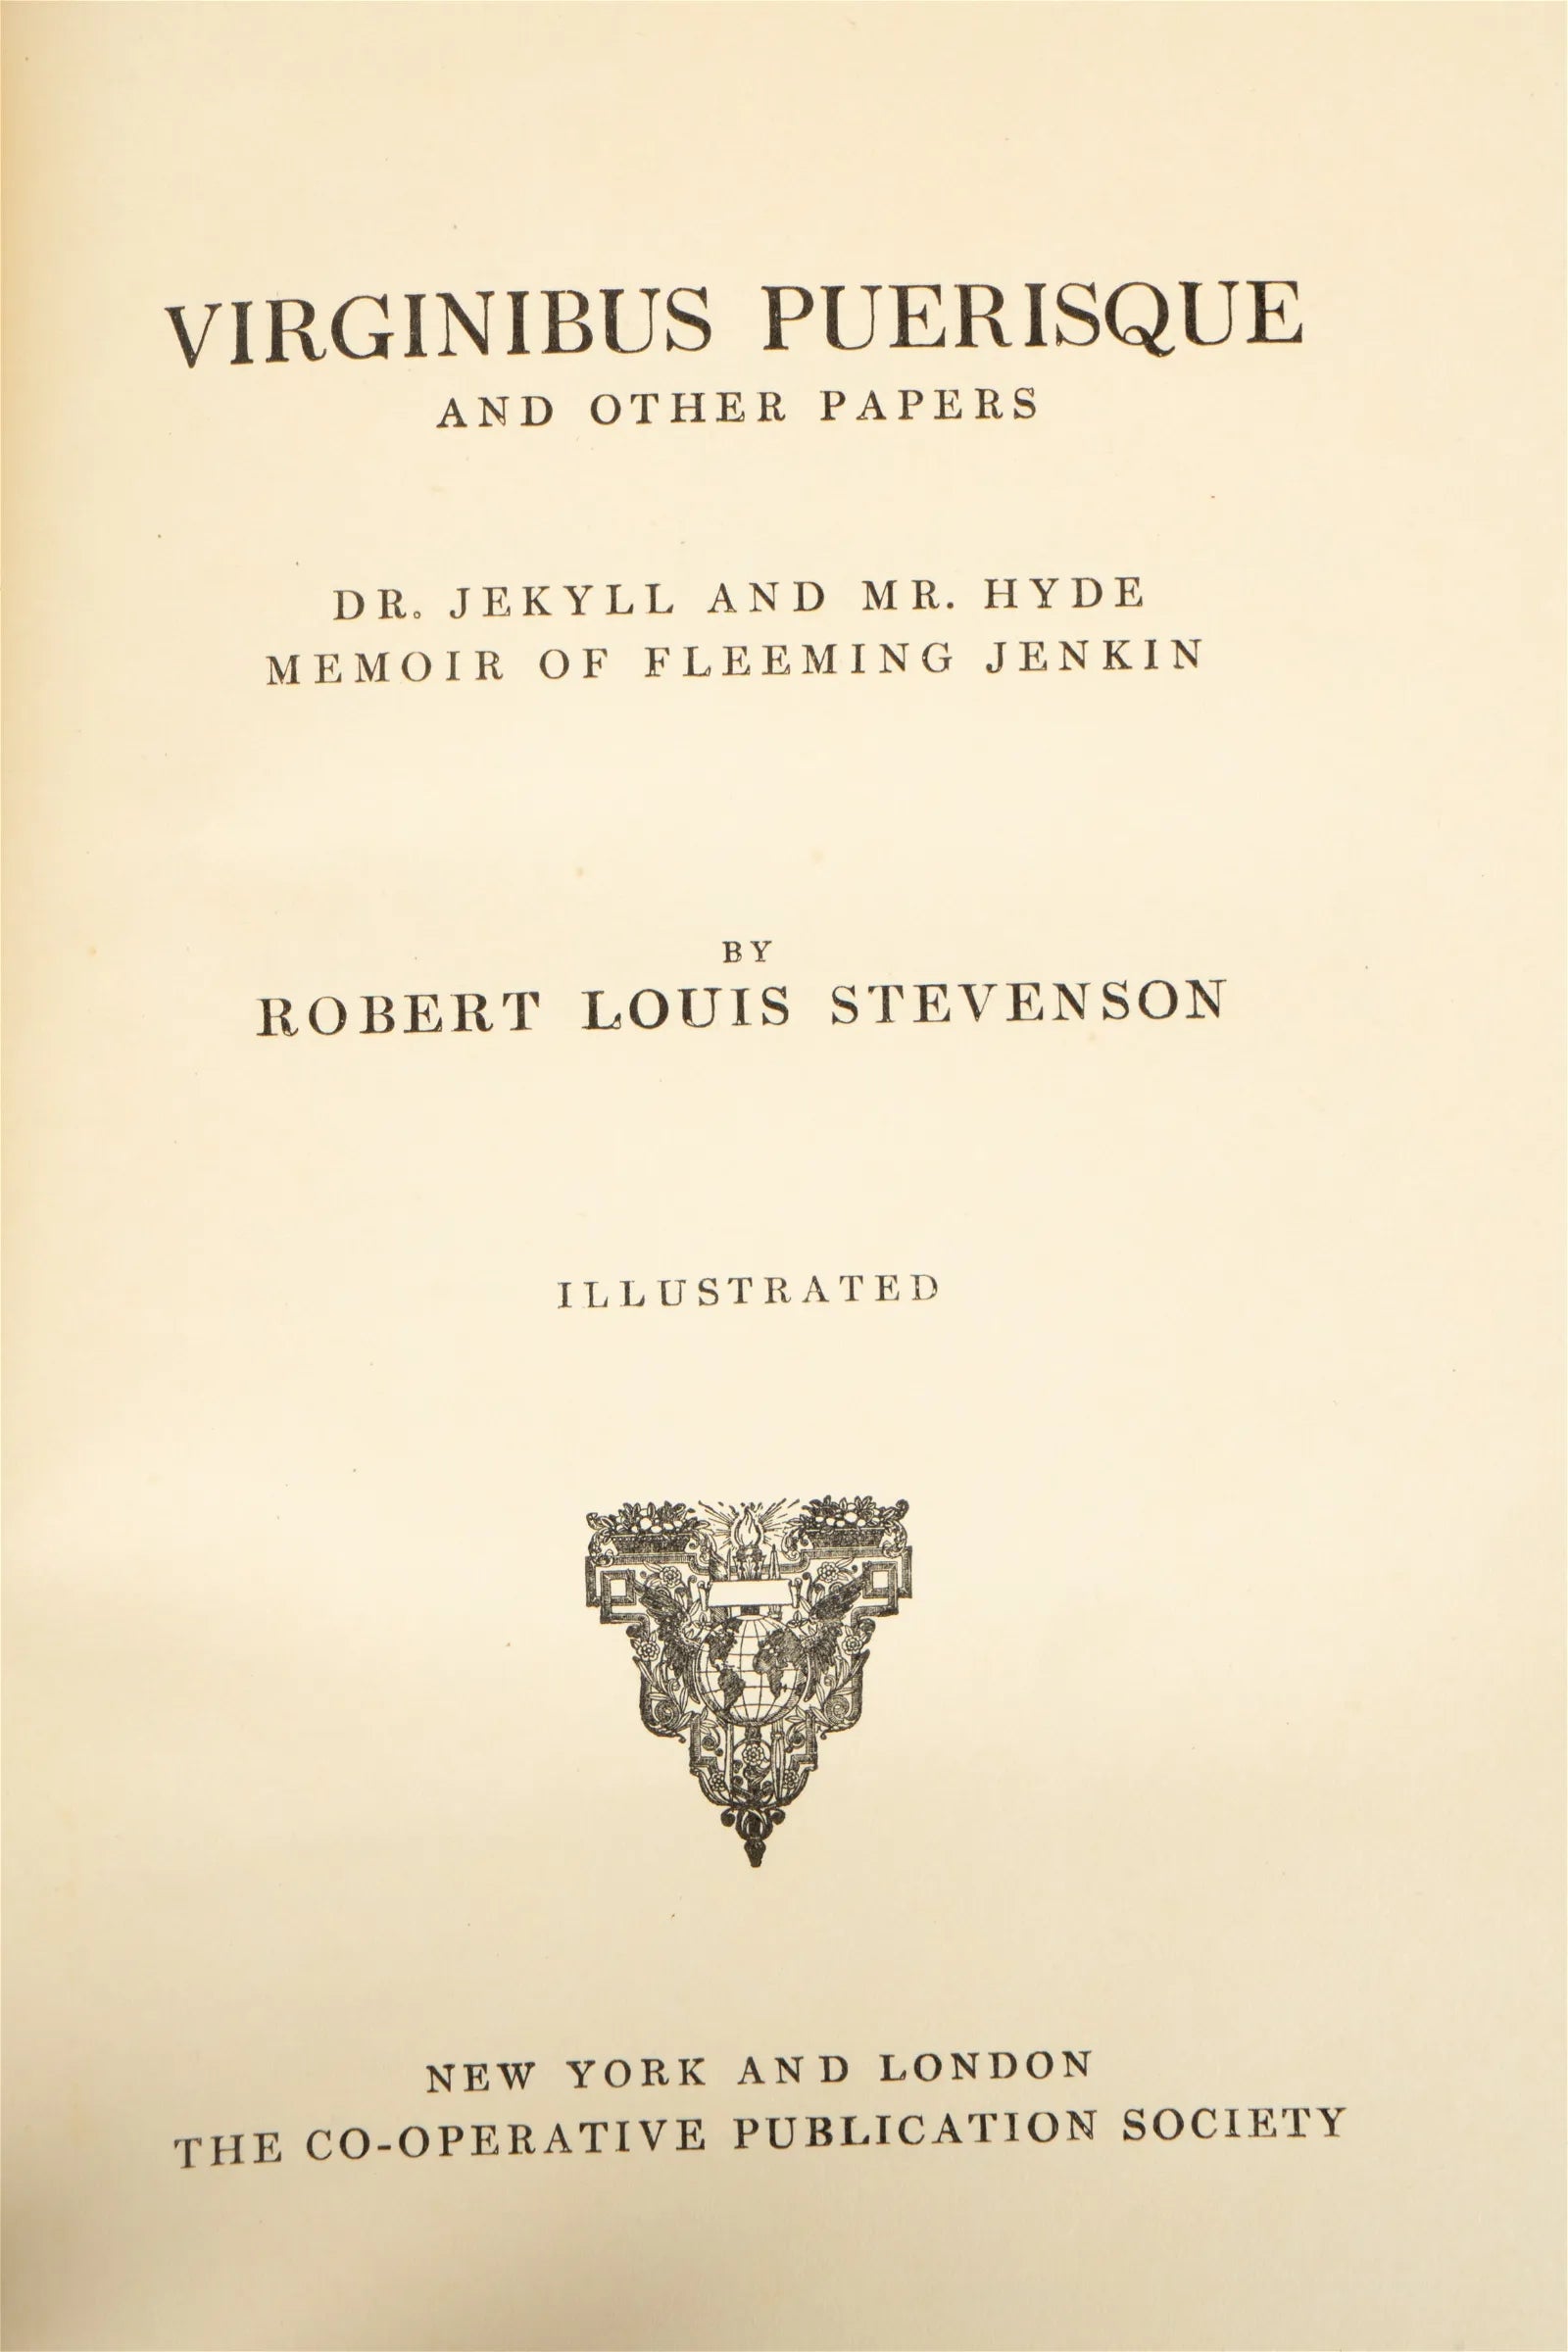 DA8-002: Late 19th C Leather Bound Works of Robert Louis Stevenson (8 Volumes)